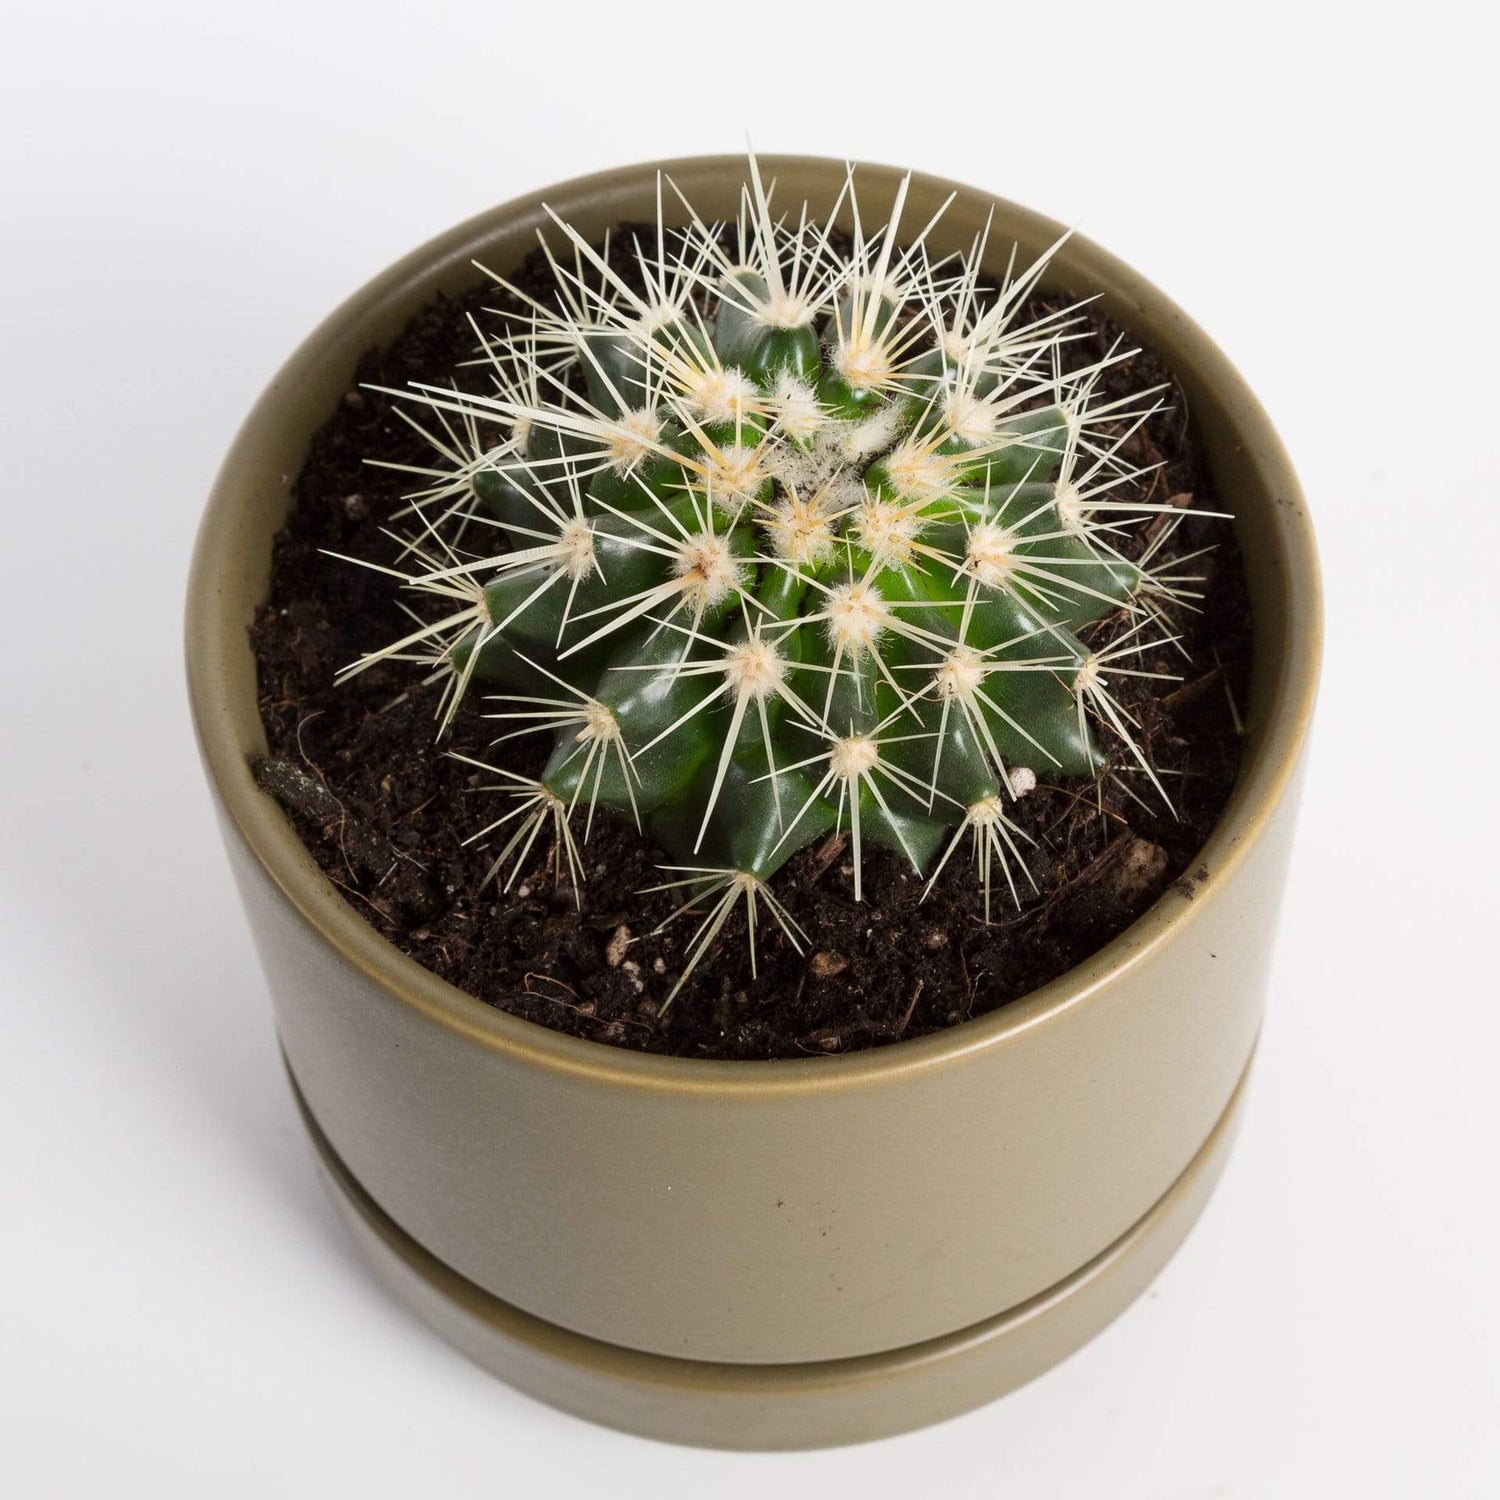 Urban Sprouts Plant 4" in nursery pot Cactus 'Golden Barrel'